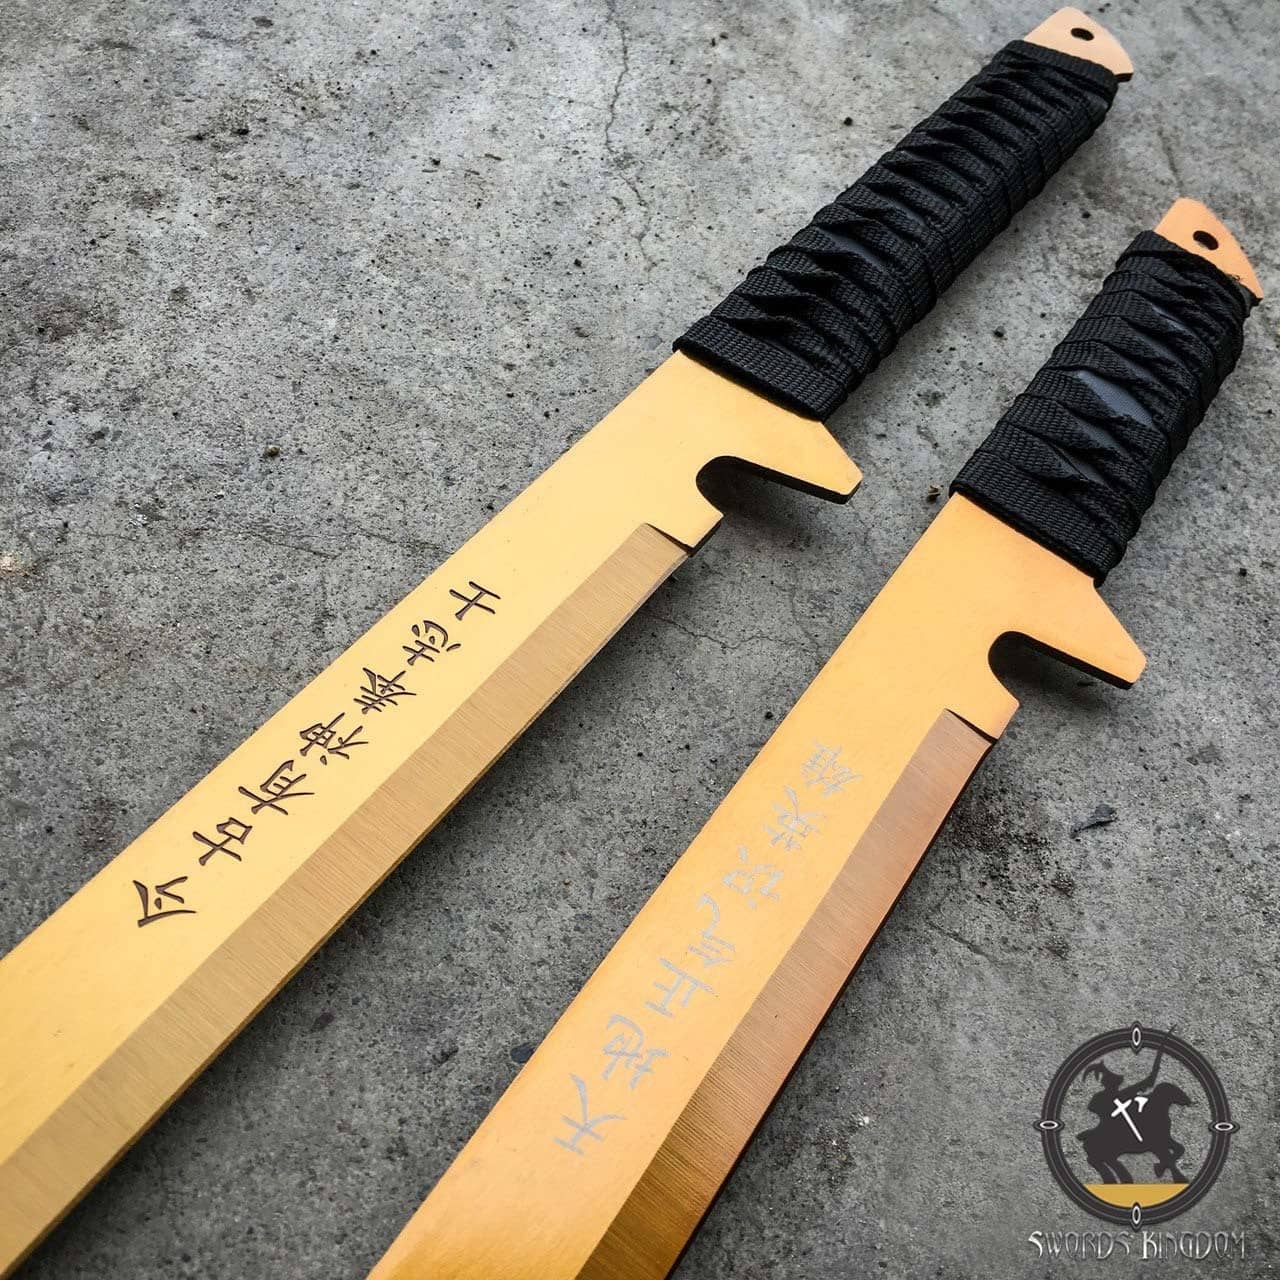 Gold Fantasy Ninja Warrior Sword 26 W/2 pcs Throwing Knife Set - Edge  Import